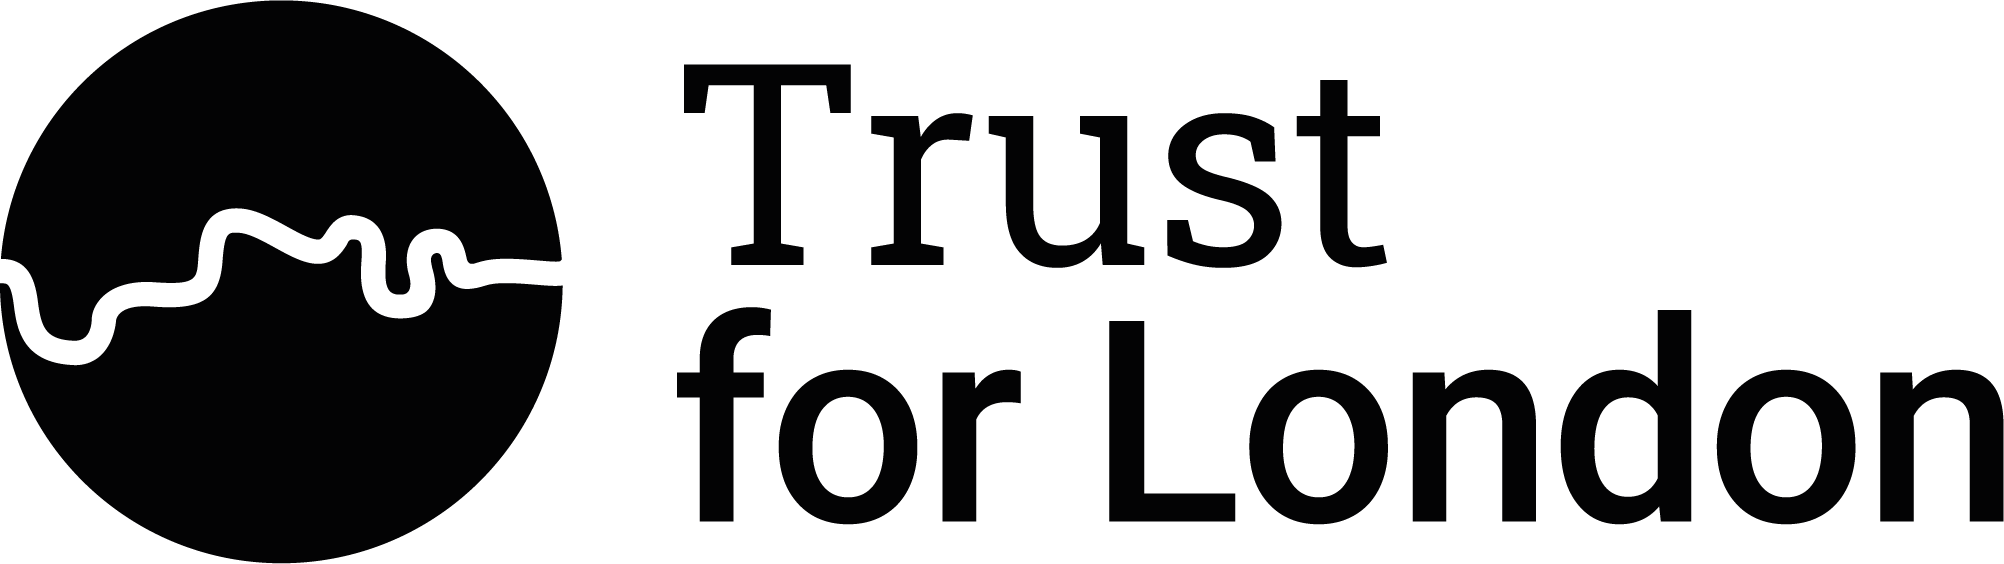 Trust for London Logo_Black.png